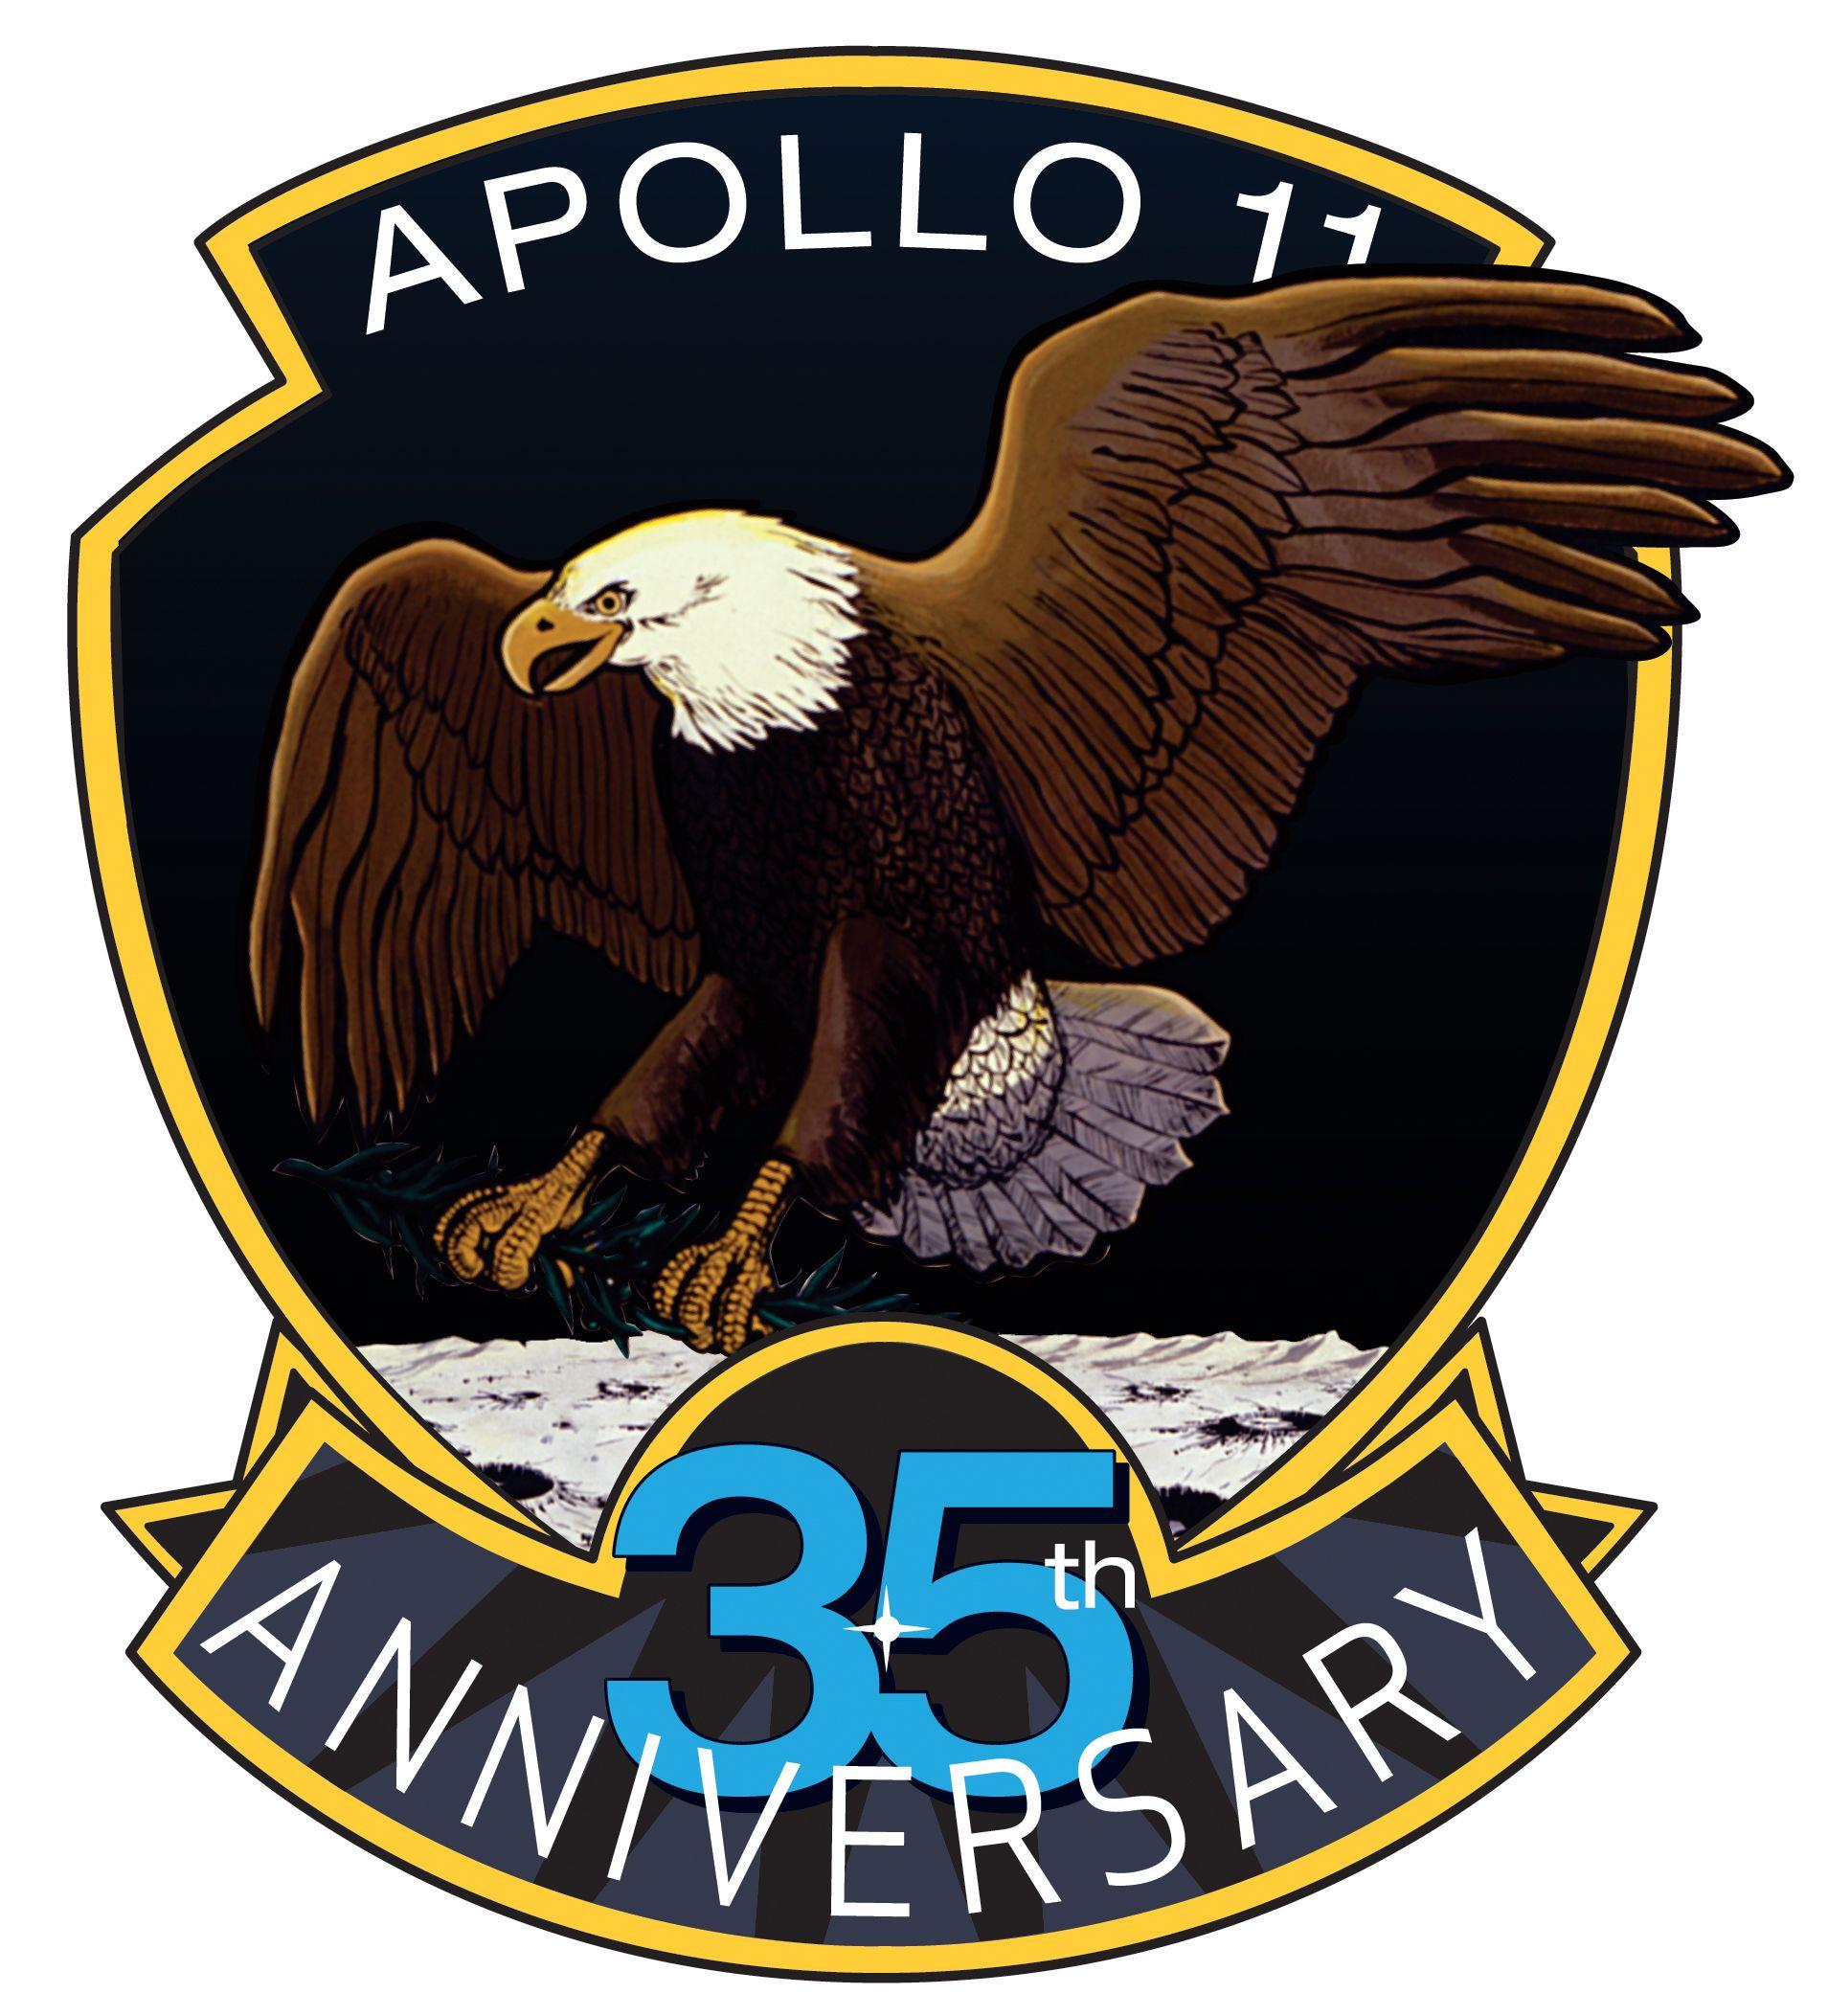 NASA Moon Logo - NASA - Apollo 11's 35th Anniversary